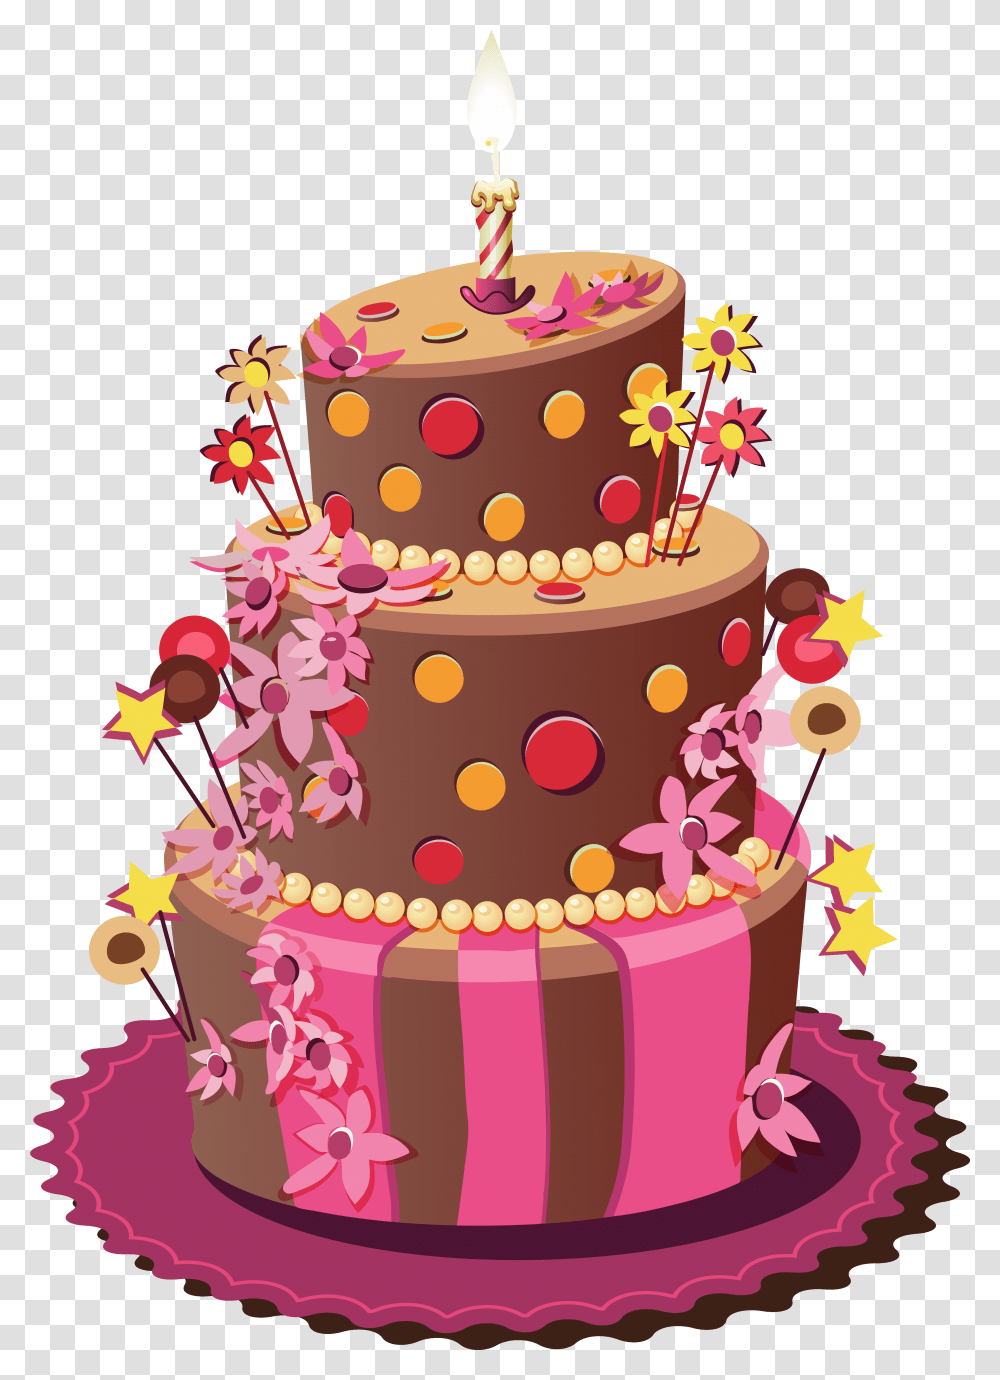 Clipart Spring Cake Birthday Cake File, Dessert, Food, Wedding Cake, Torte Transparent Png